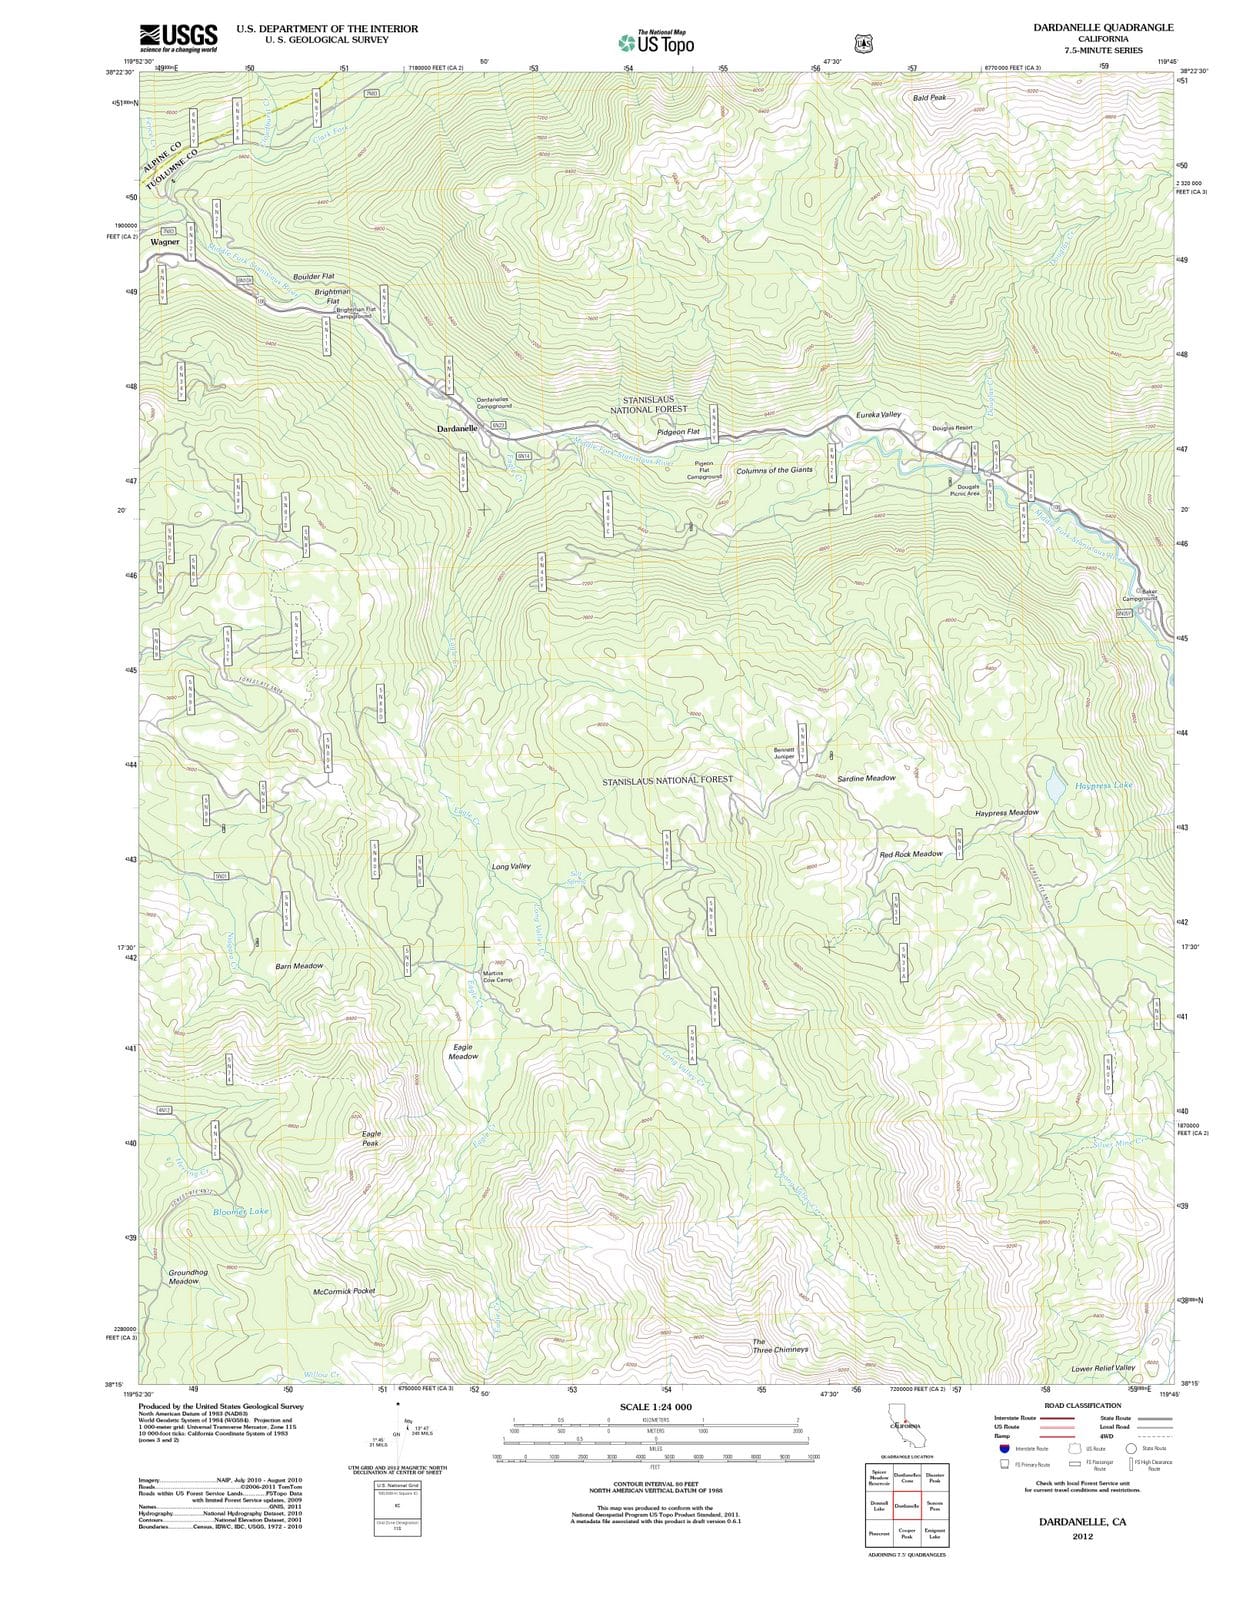 2012 Dardanelle, CA - California - USGS Topographic Map